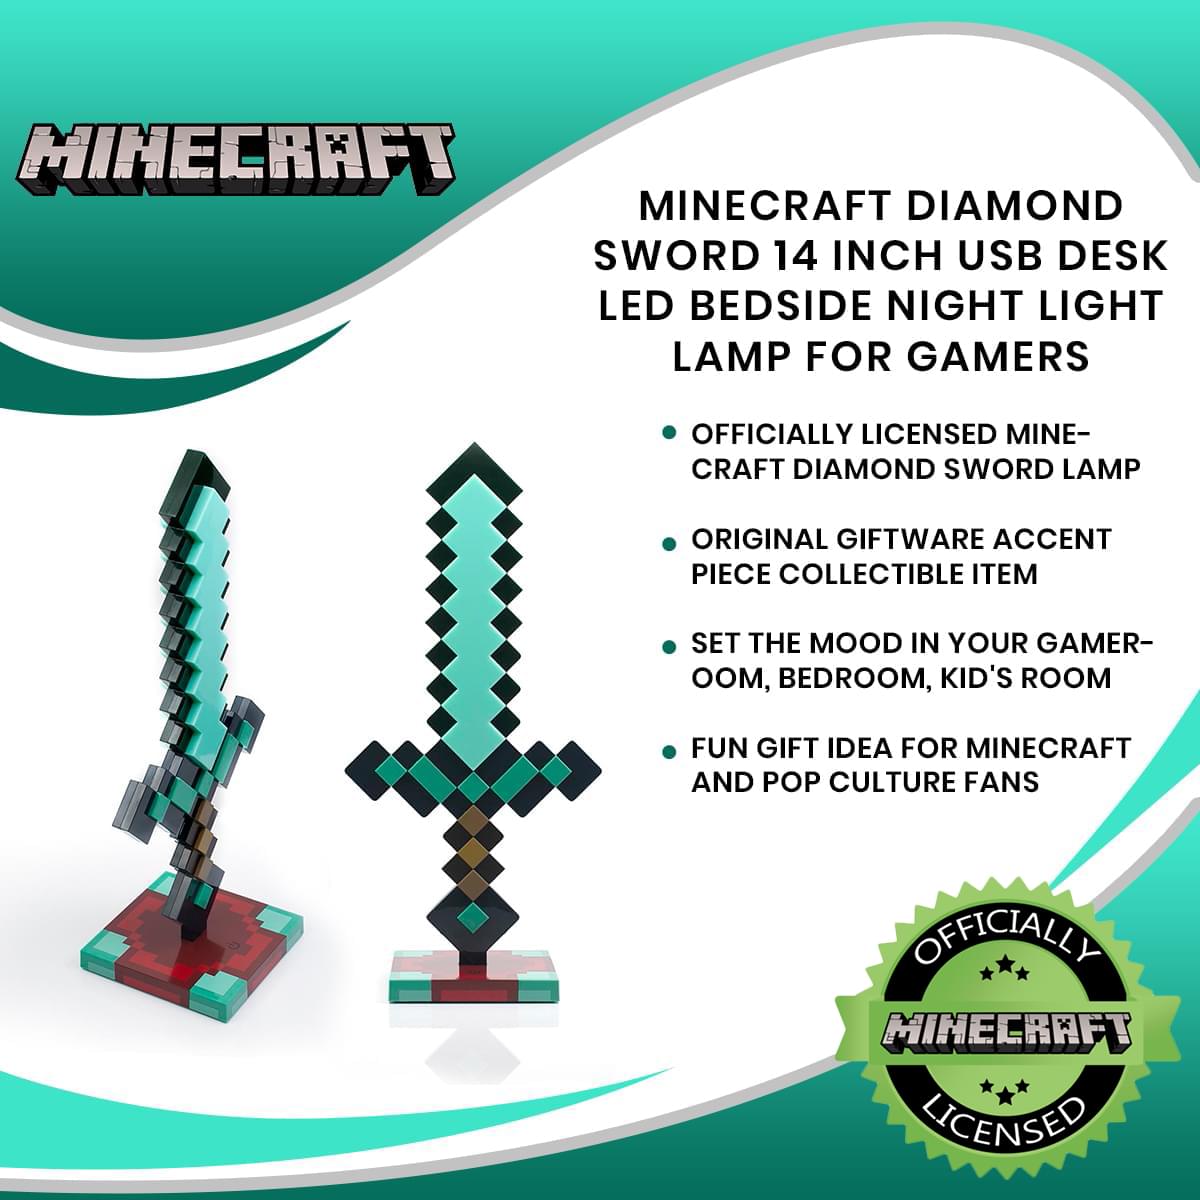 Minecraft Diamond Sword 14 Inch USB Desk LED Bedside Night Light Lamp for Gamers